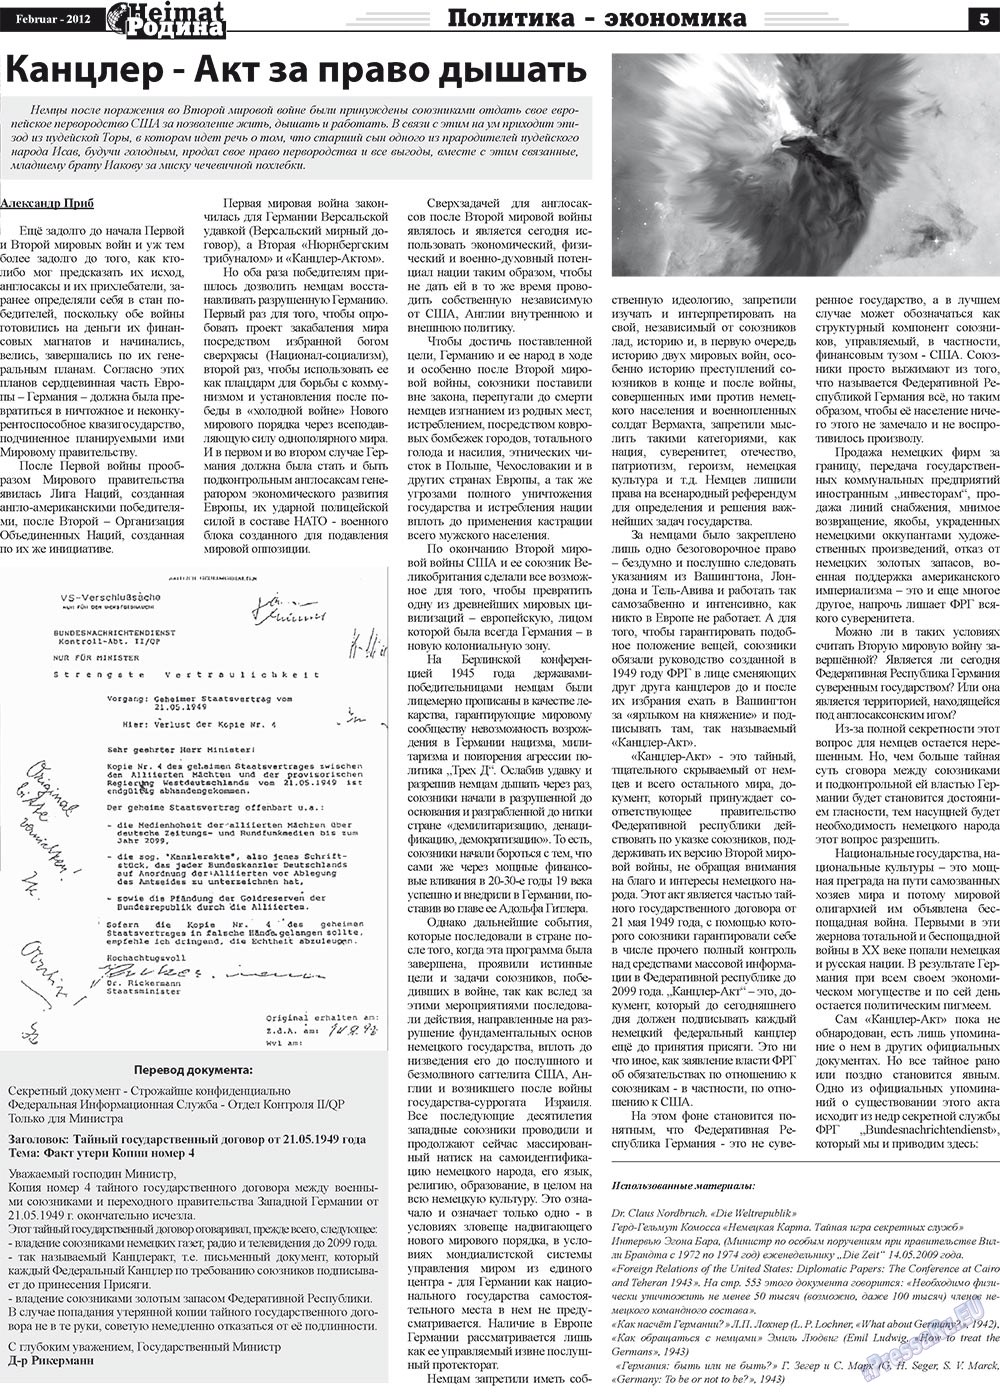 Heimat-Родина, газета. 2012 №2 стр.5